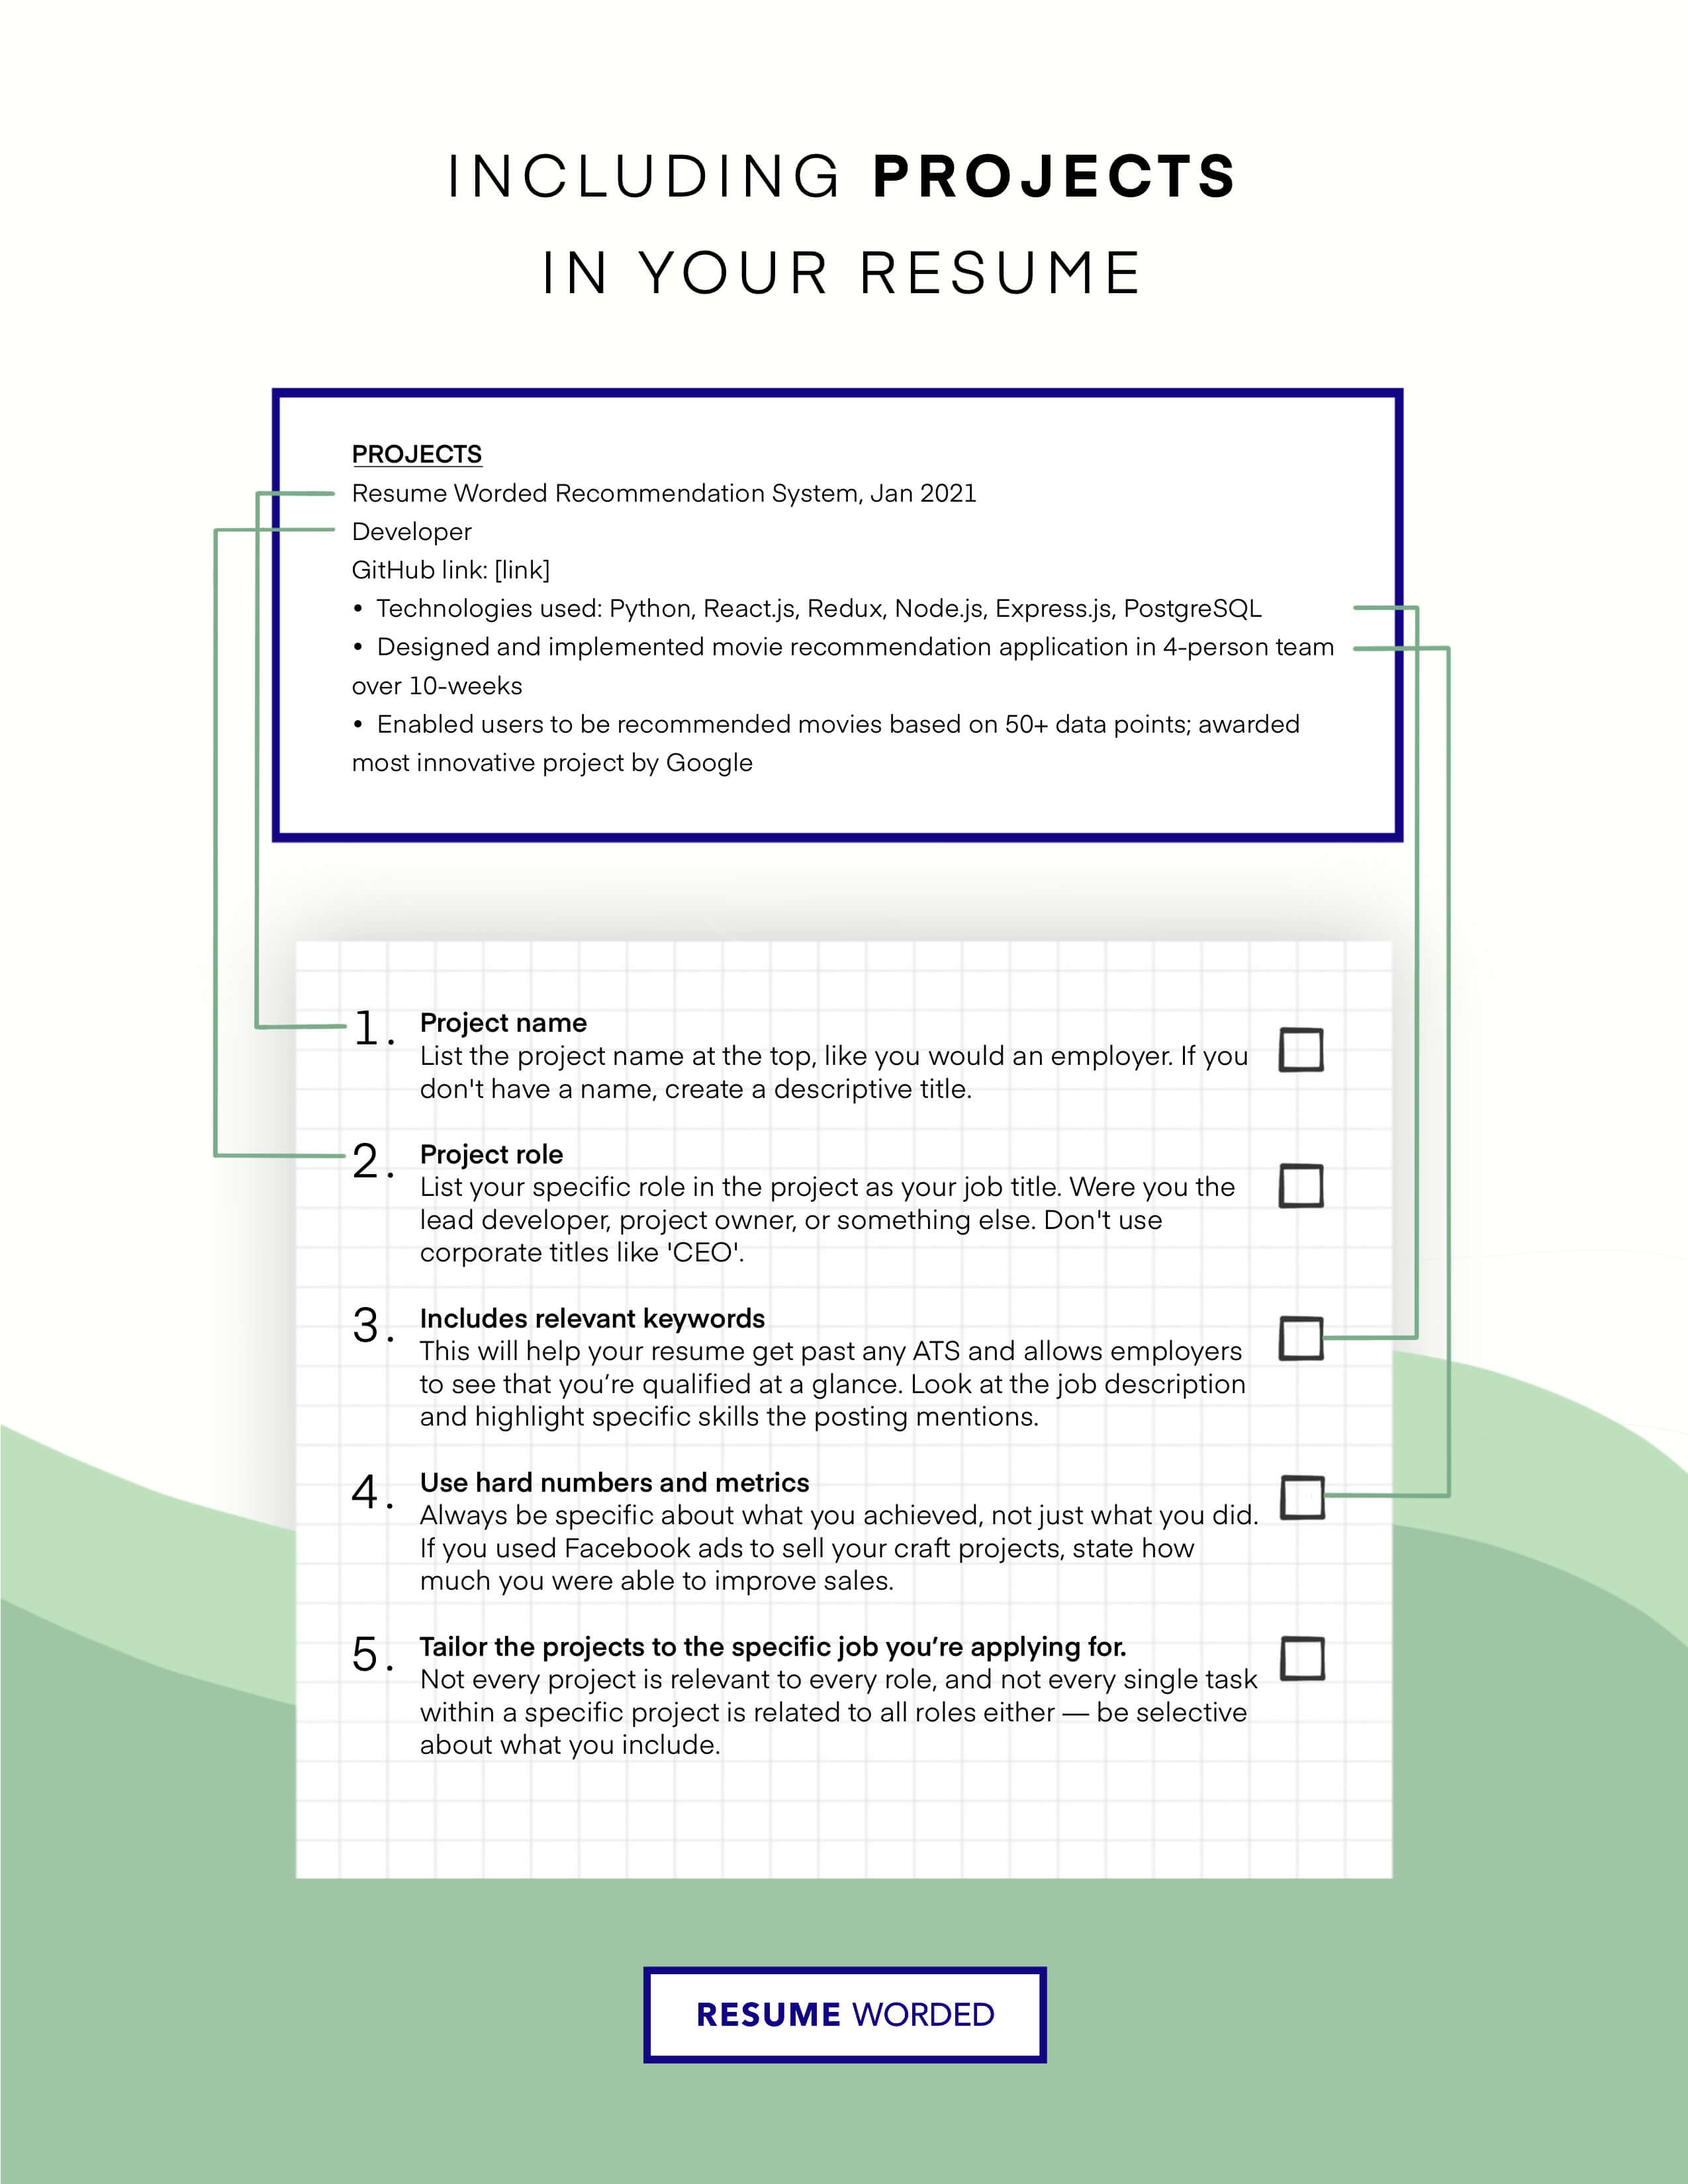 Include key copywriting projects on your resume. - Freelance Copywriter Resume